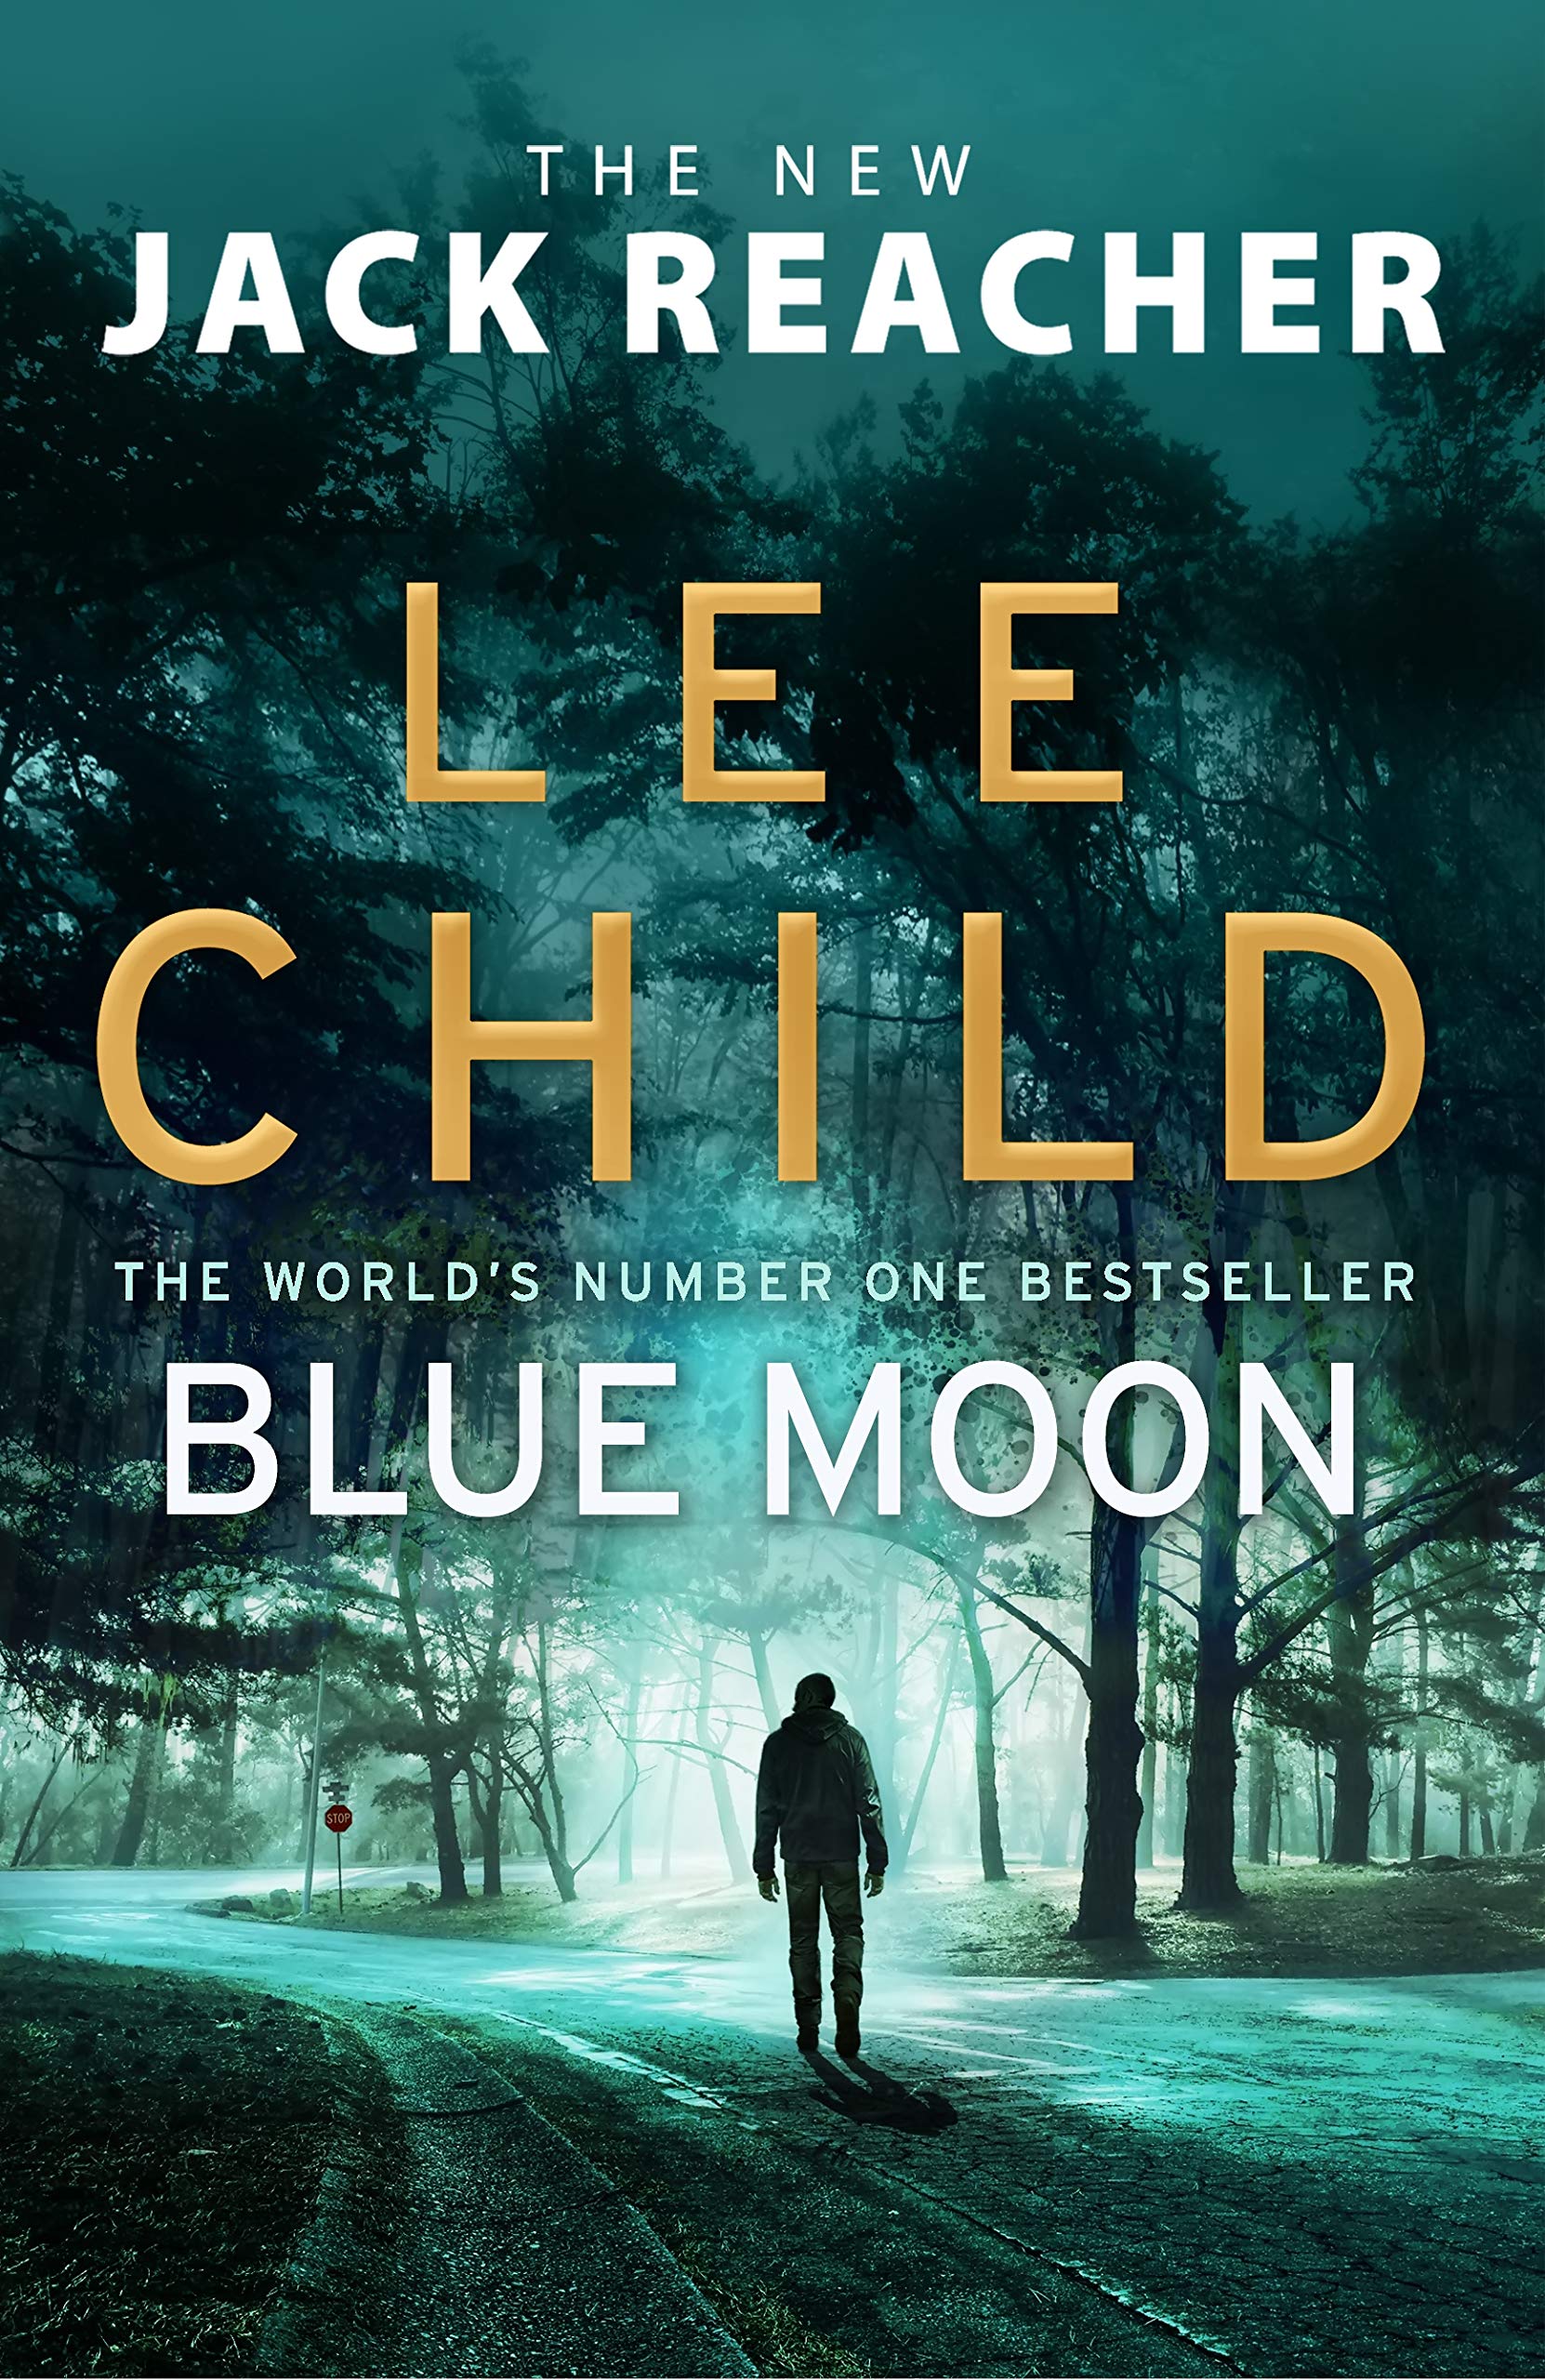 Blue Moon (Jack Reacher 24) Book Release Date? (2019)